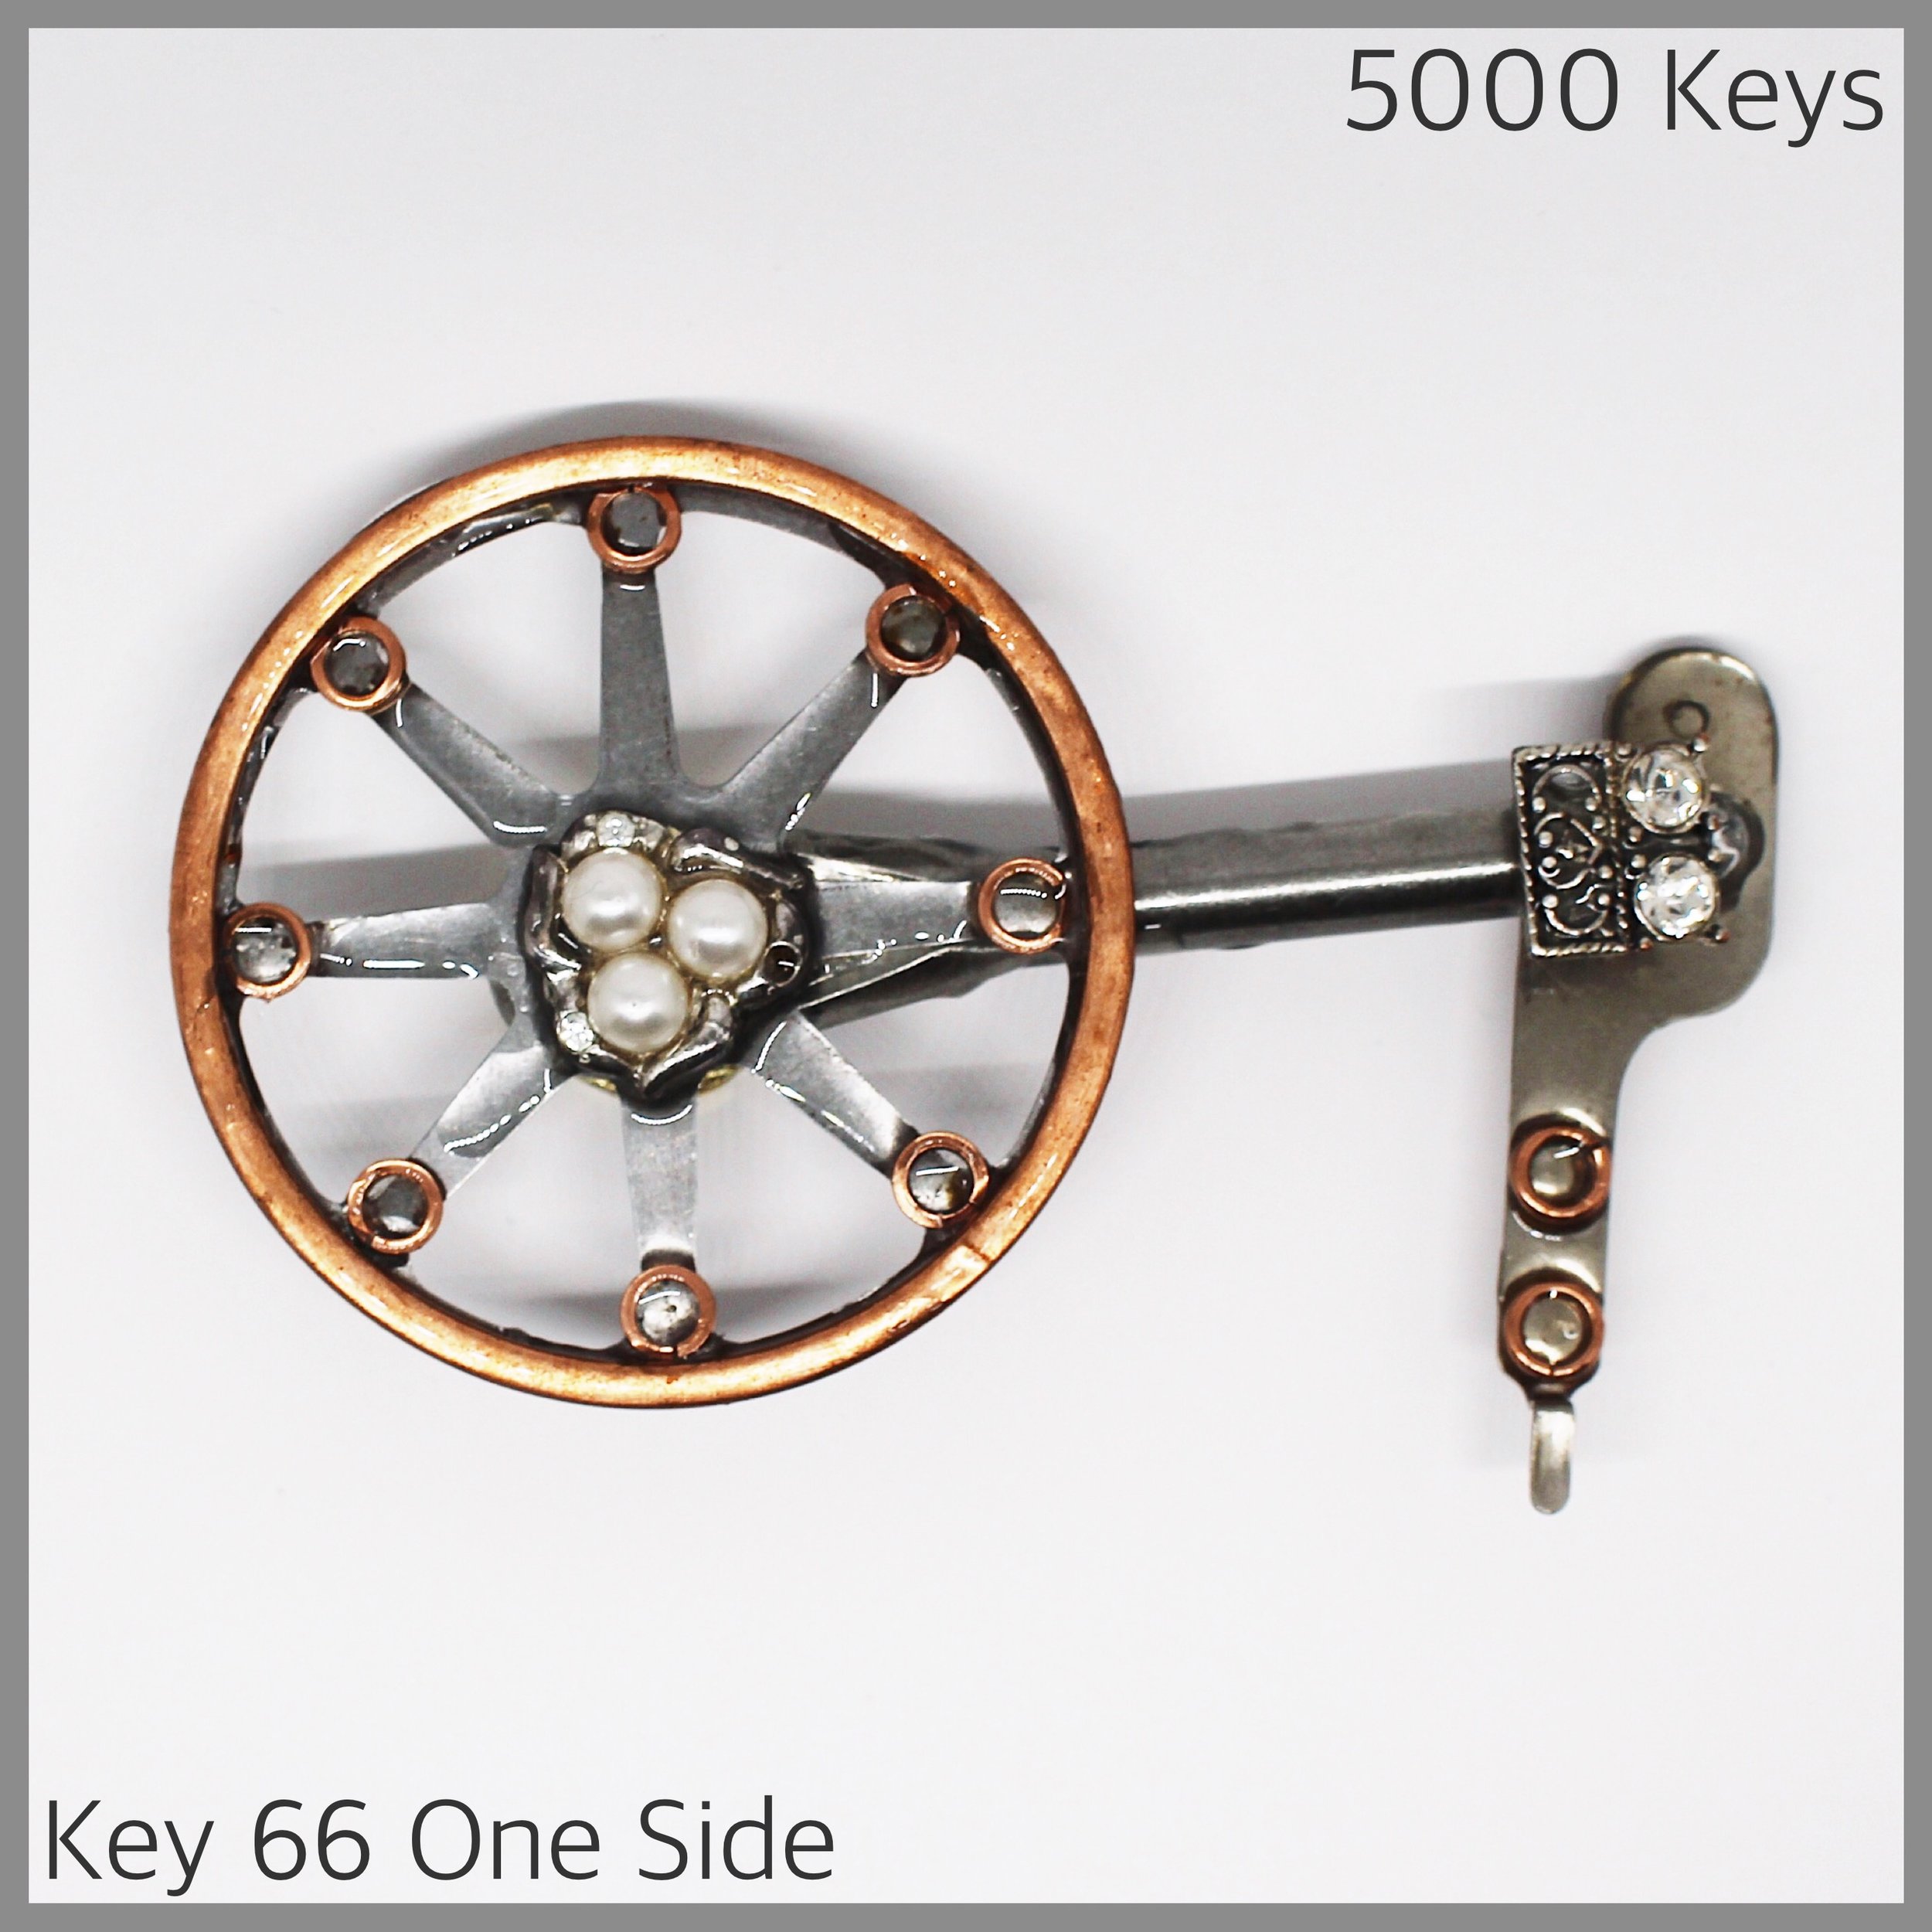 Key 66 one side - 1.JPG